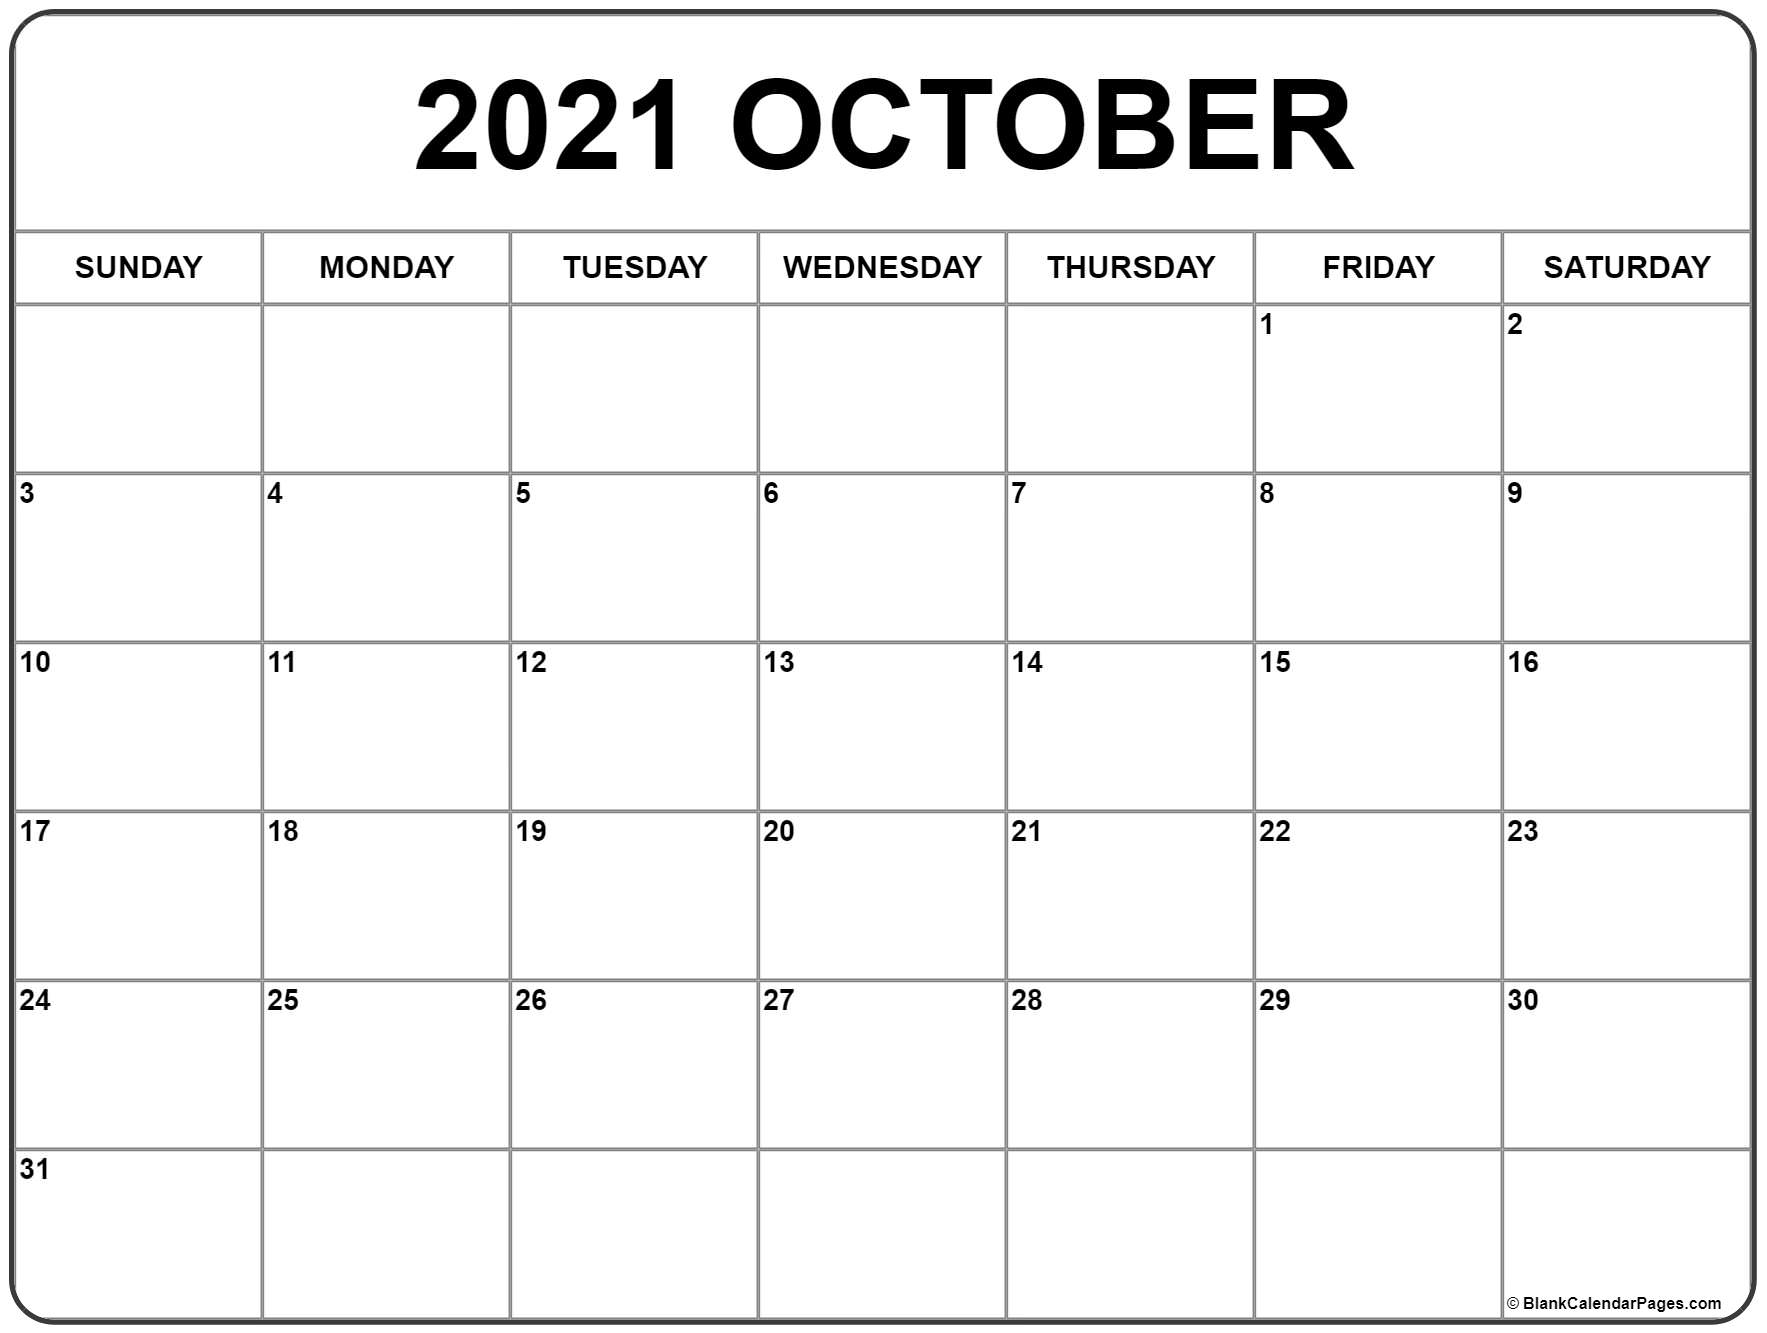 Take October 2021 Calendar